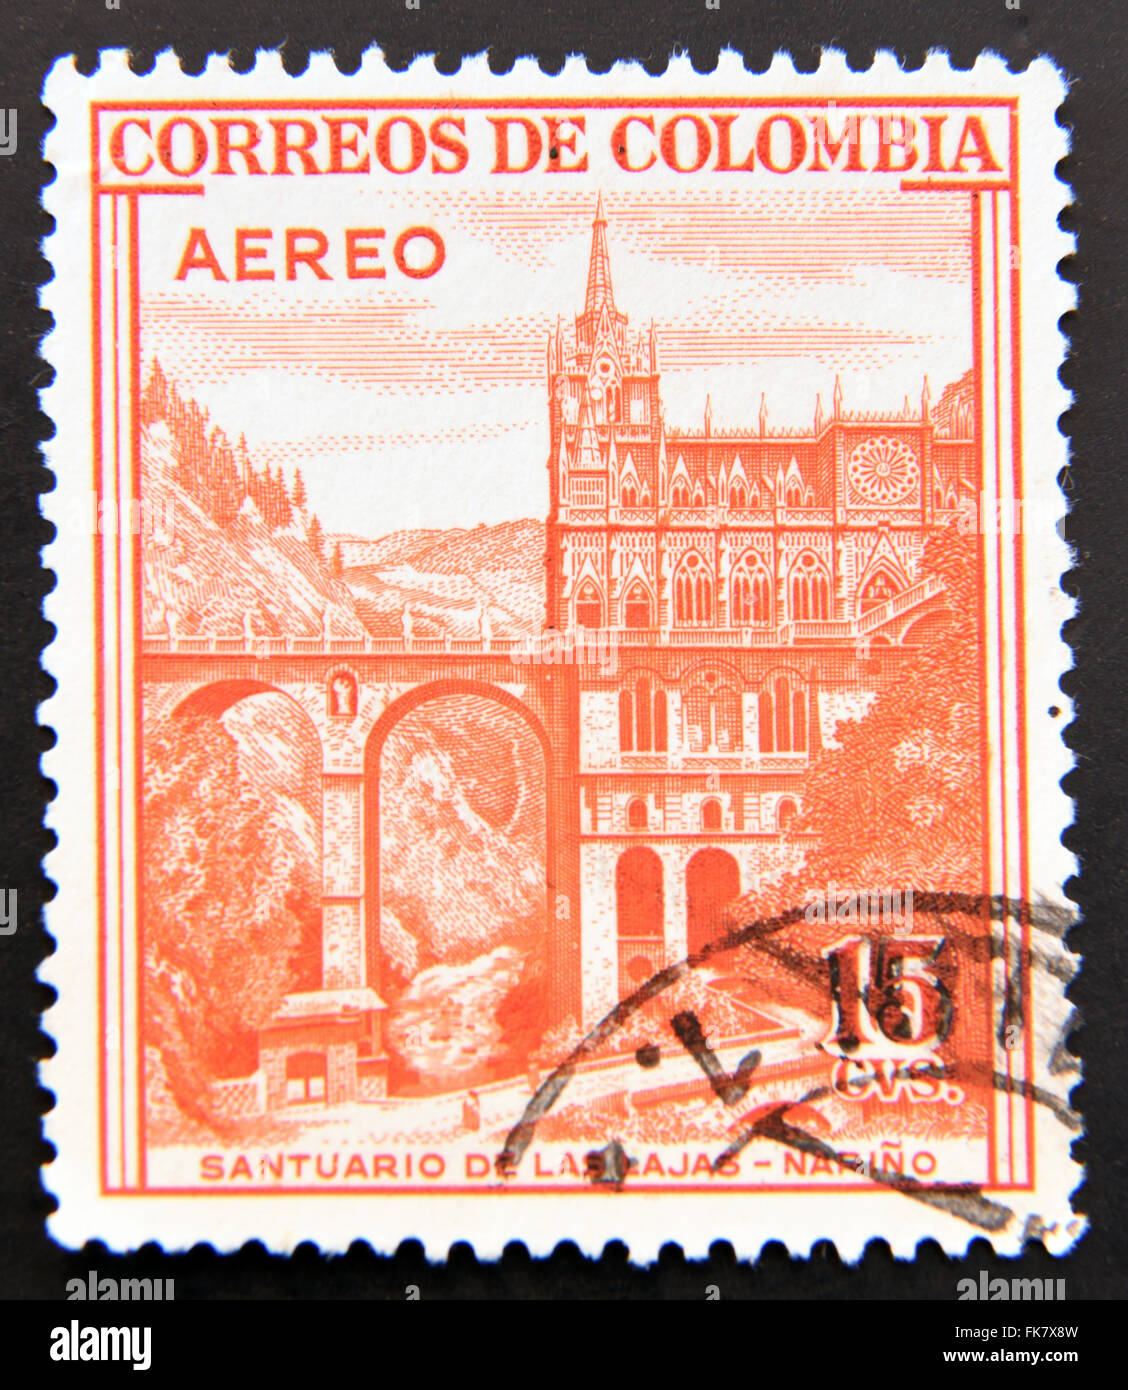 COLOMBIA - CIRCA 1954: A stamp printed in Colombia shows Santuario de las Lajas, Narino, circa 1954 Stock Photo